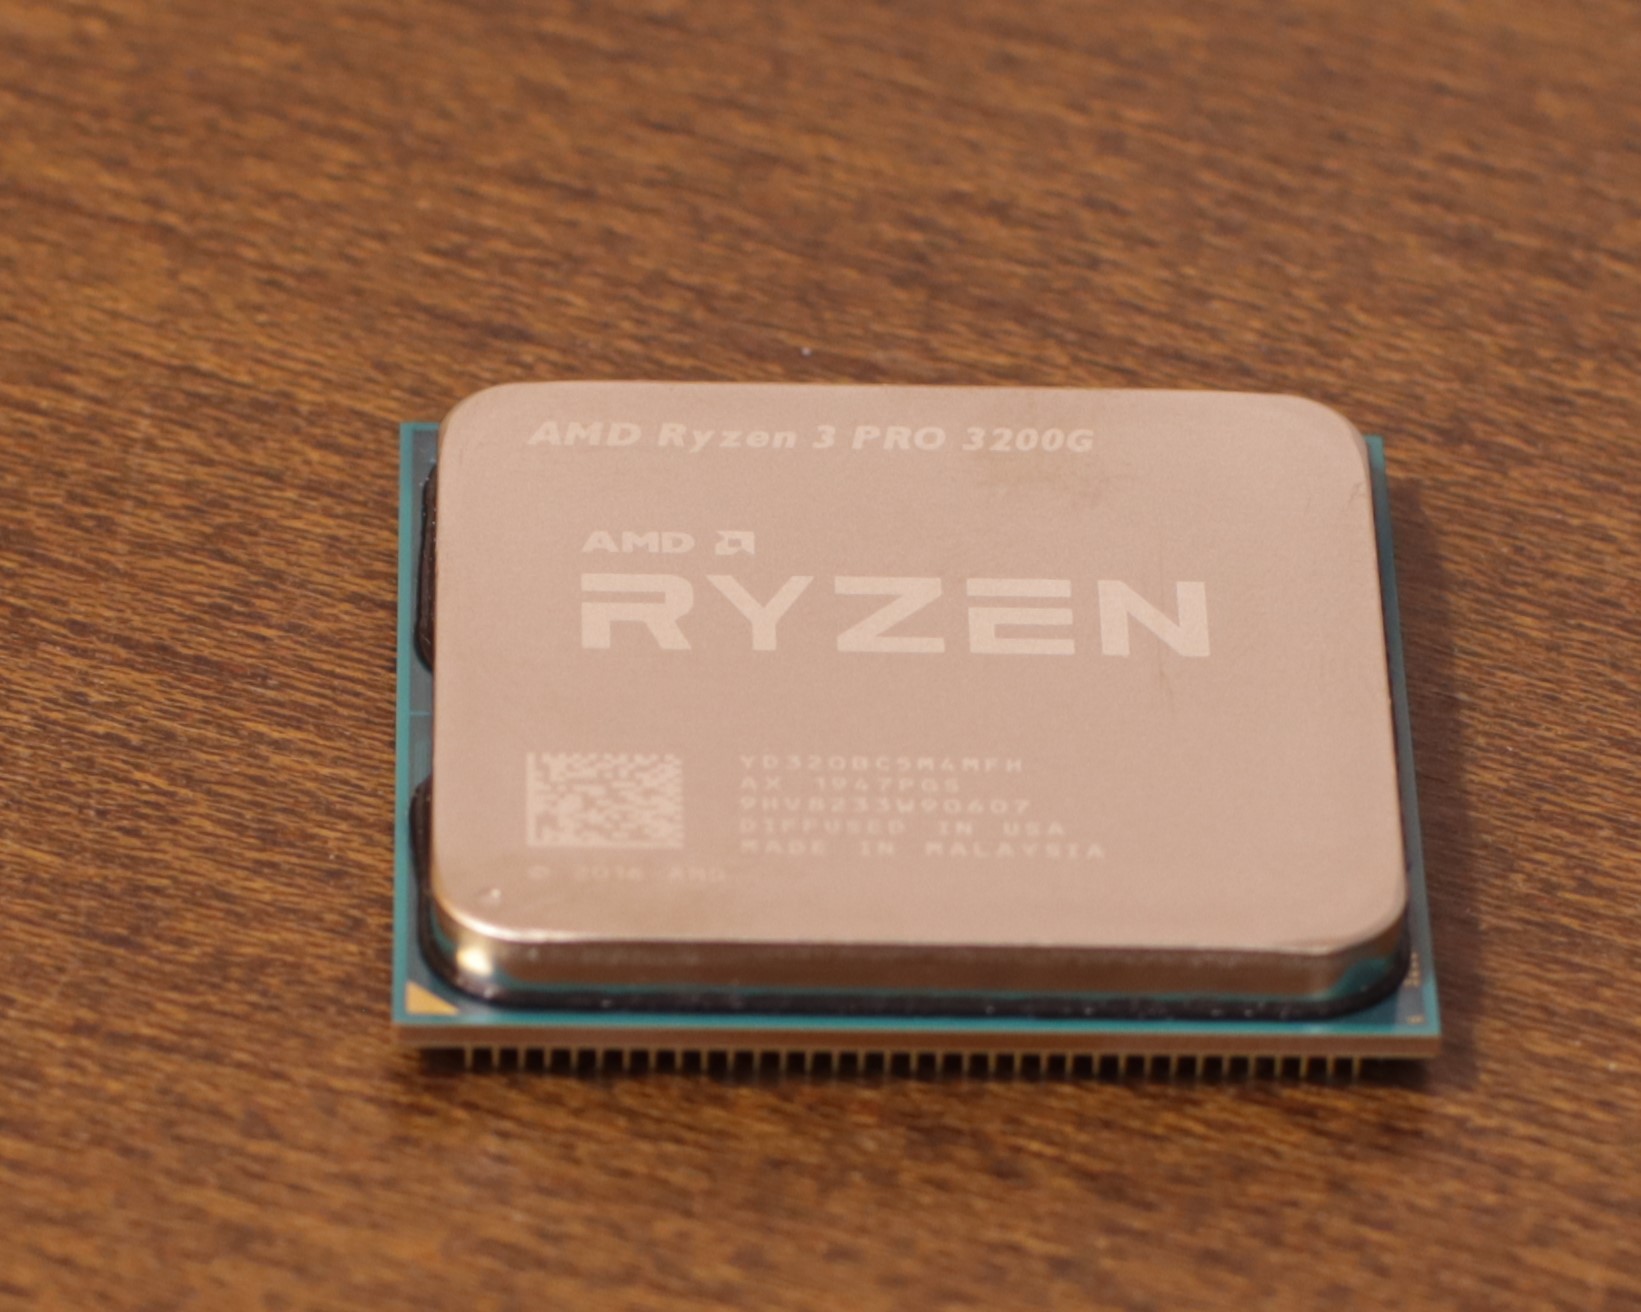 3 pro 3200g. AMD Ryzen 3 Pro 3200g. Процессор AMD Ryzen 3 3200g. Процессор AMD Ryzen 3 3200g am4. Ryzen 3 Pro 3200g процессор.